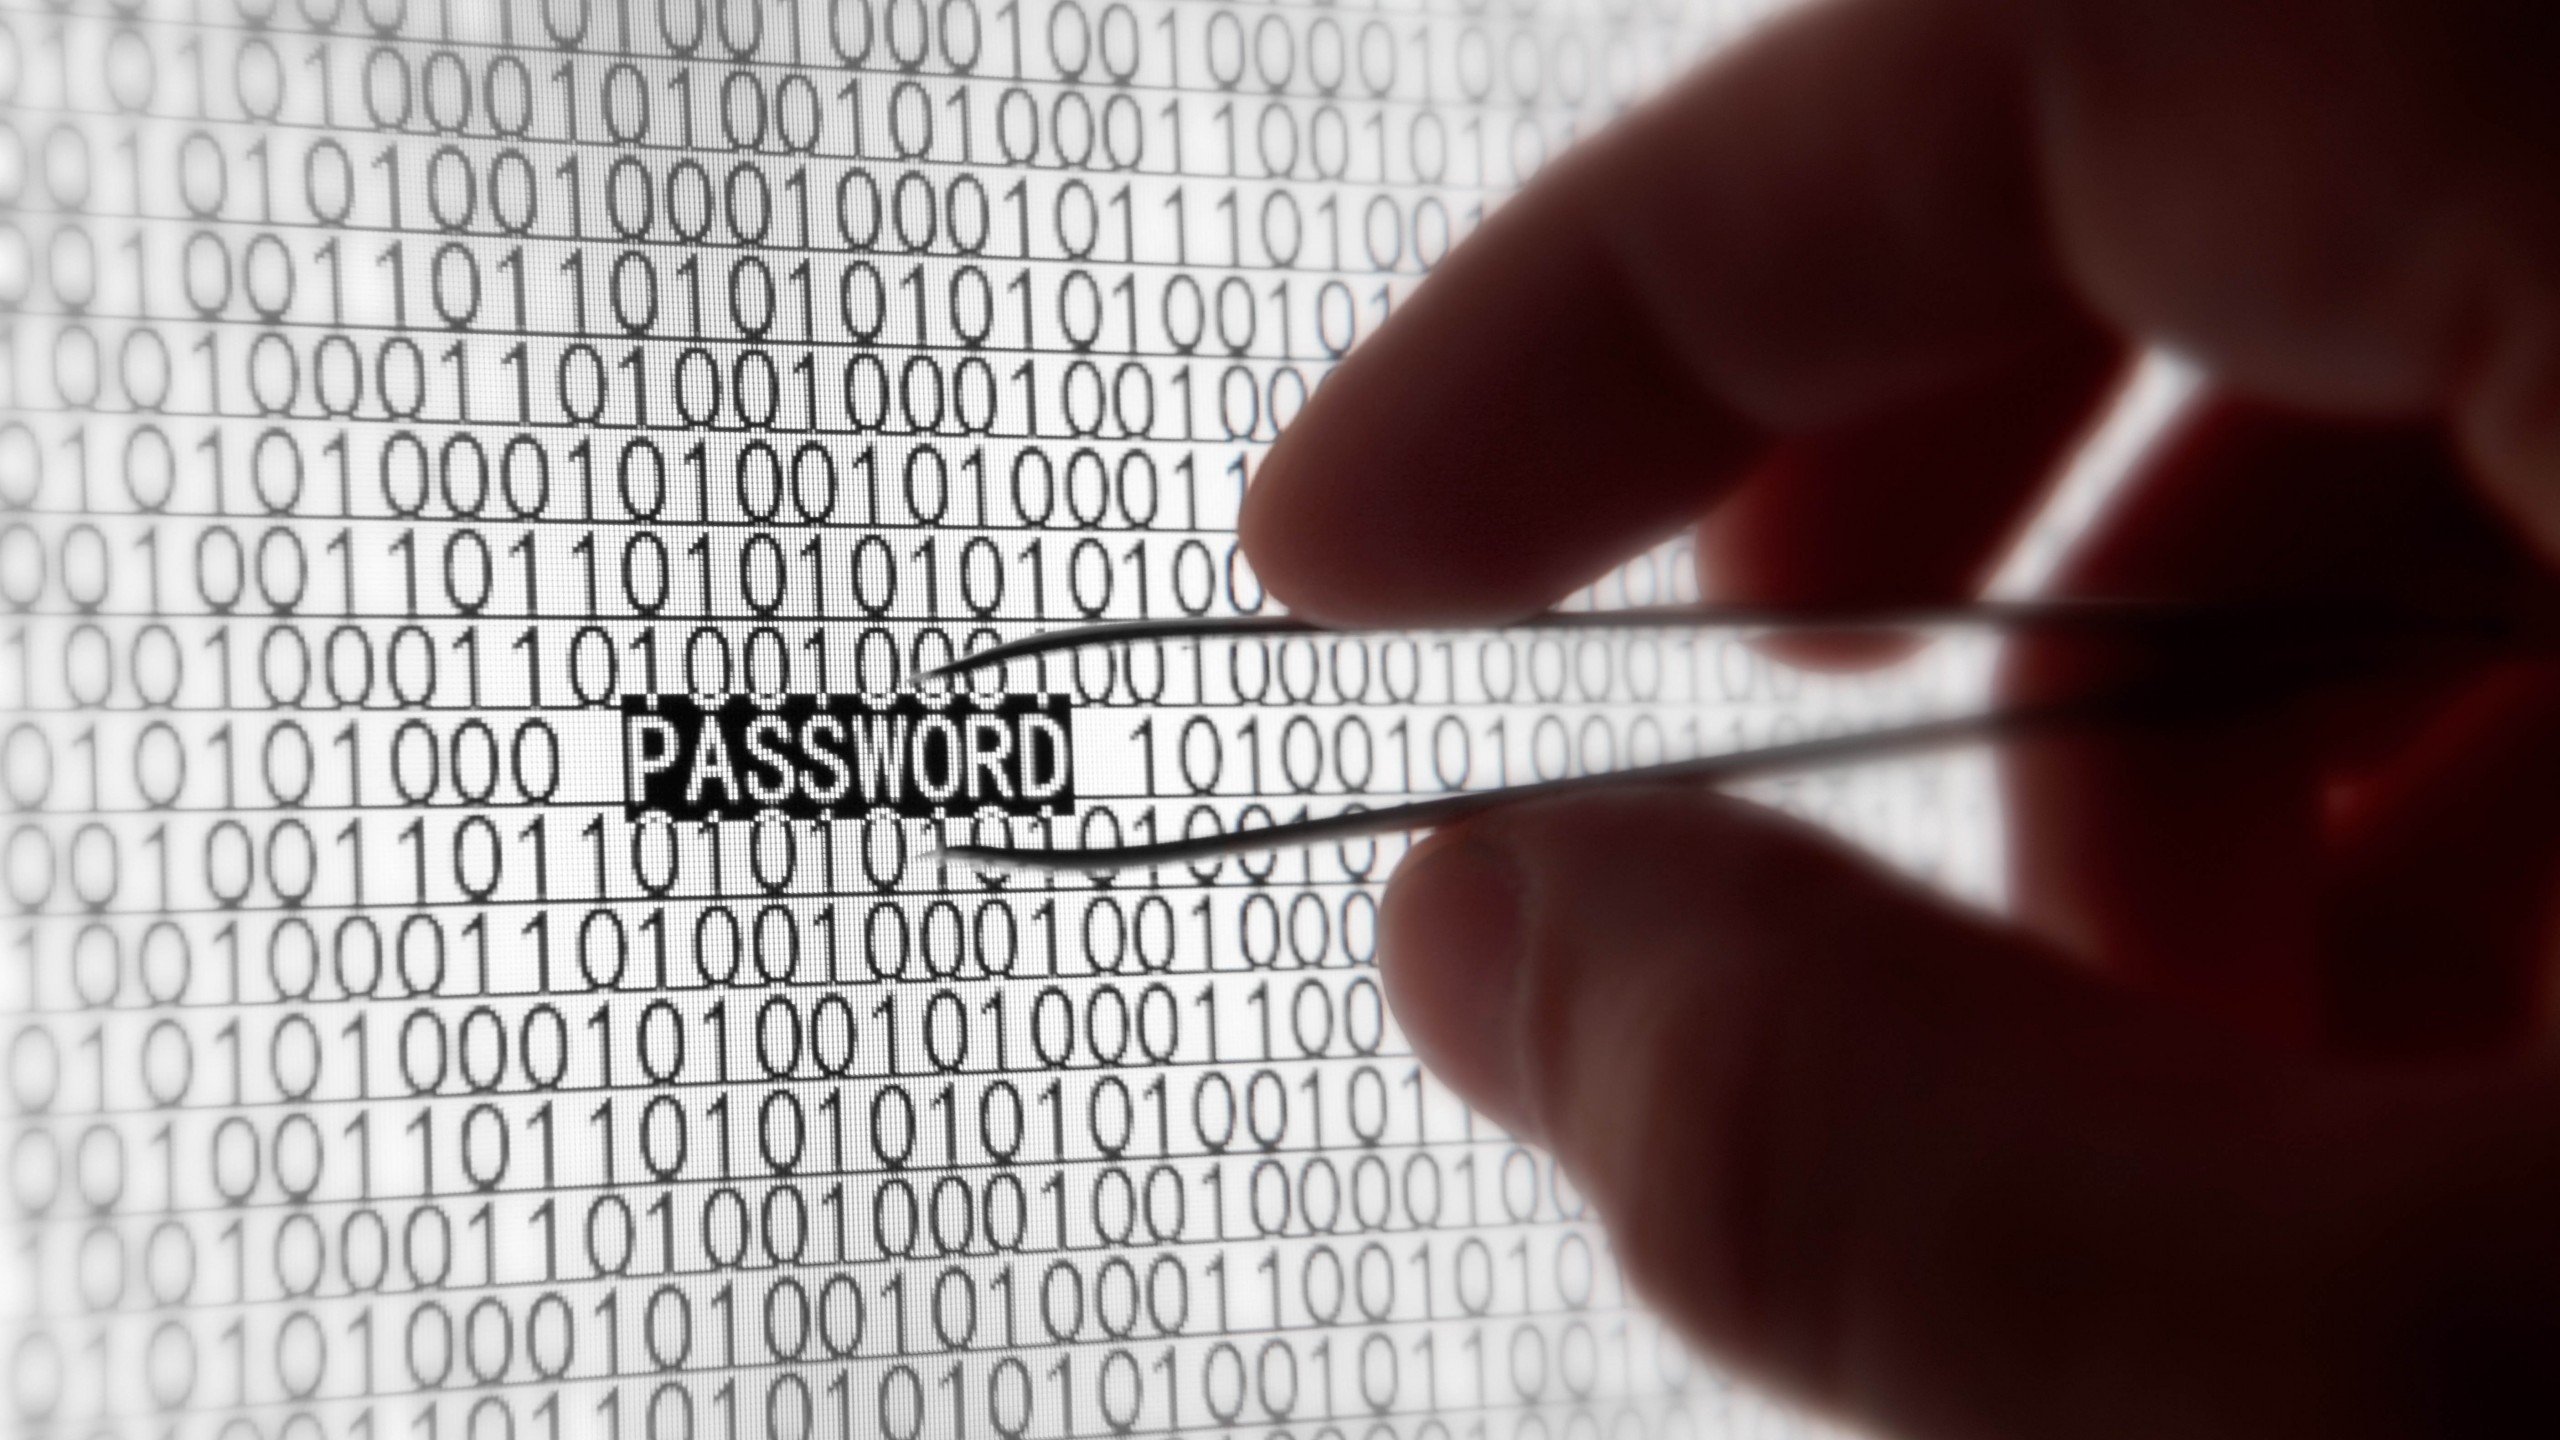 LDAP and password encryption strength